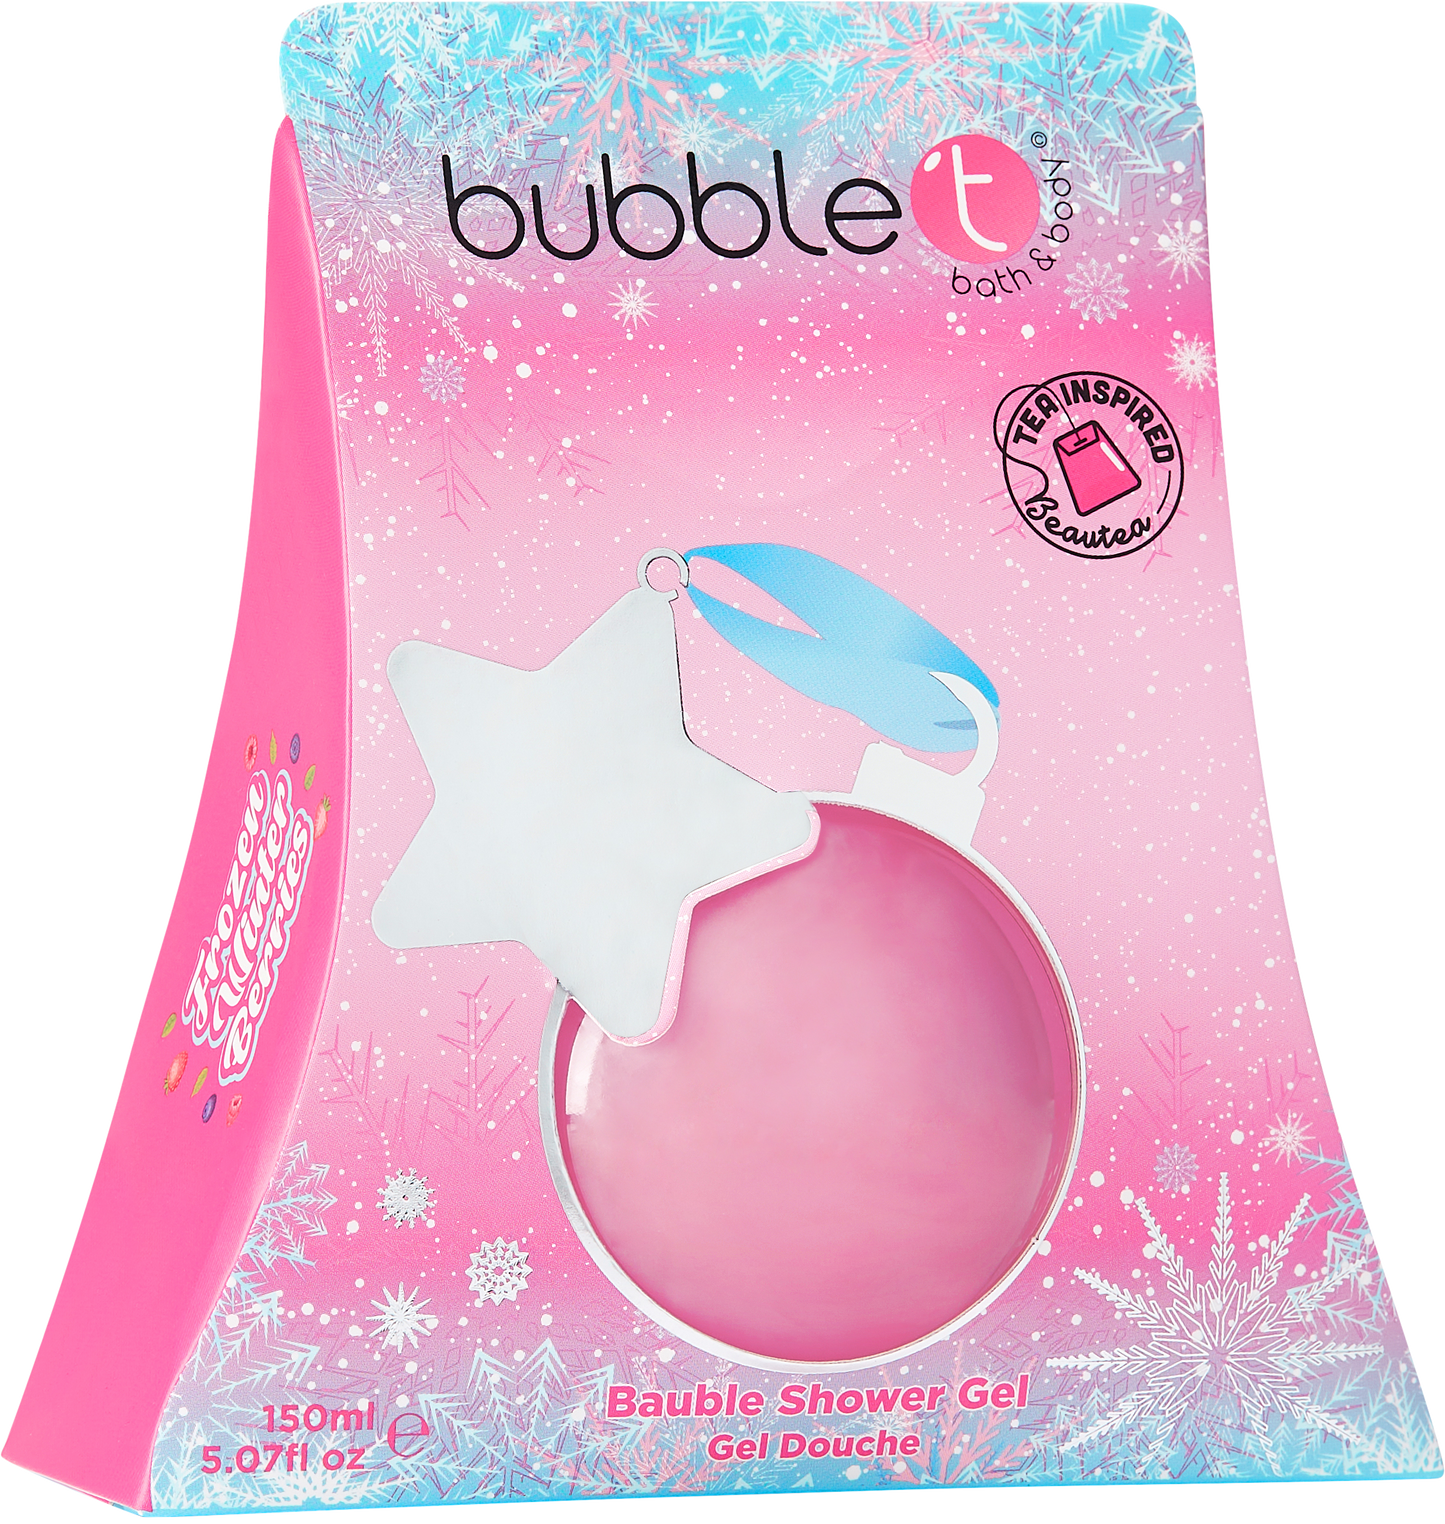 Bubble T Christmas Shower Gel Bauble Frozen Winter Berries, 150ml